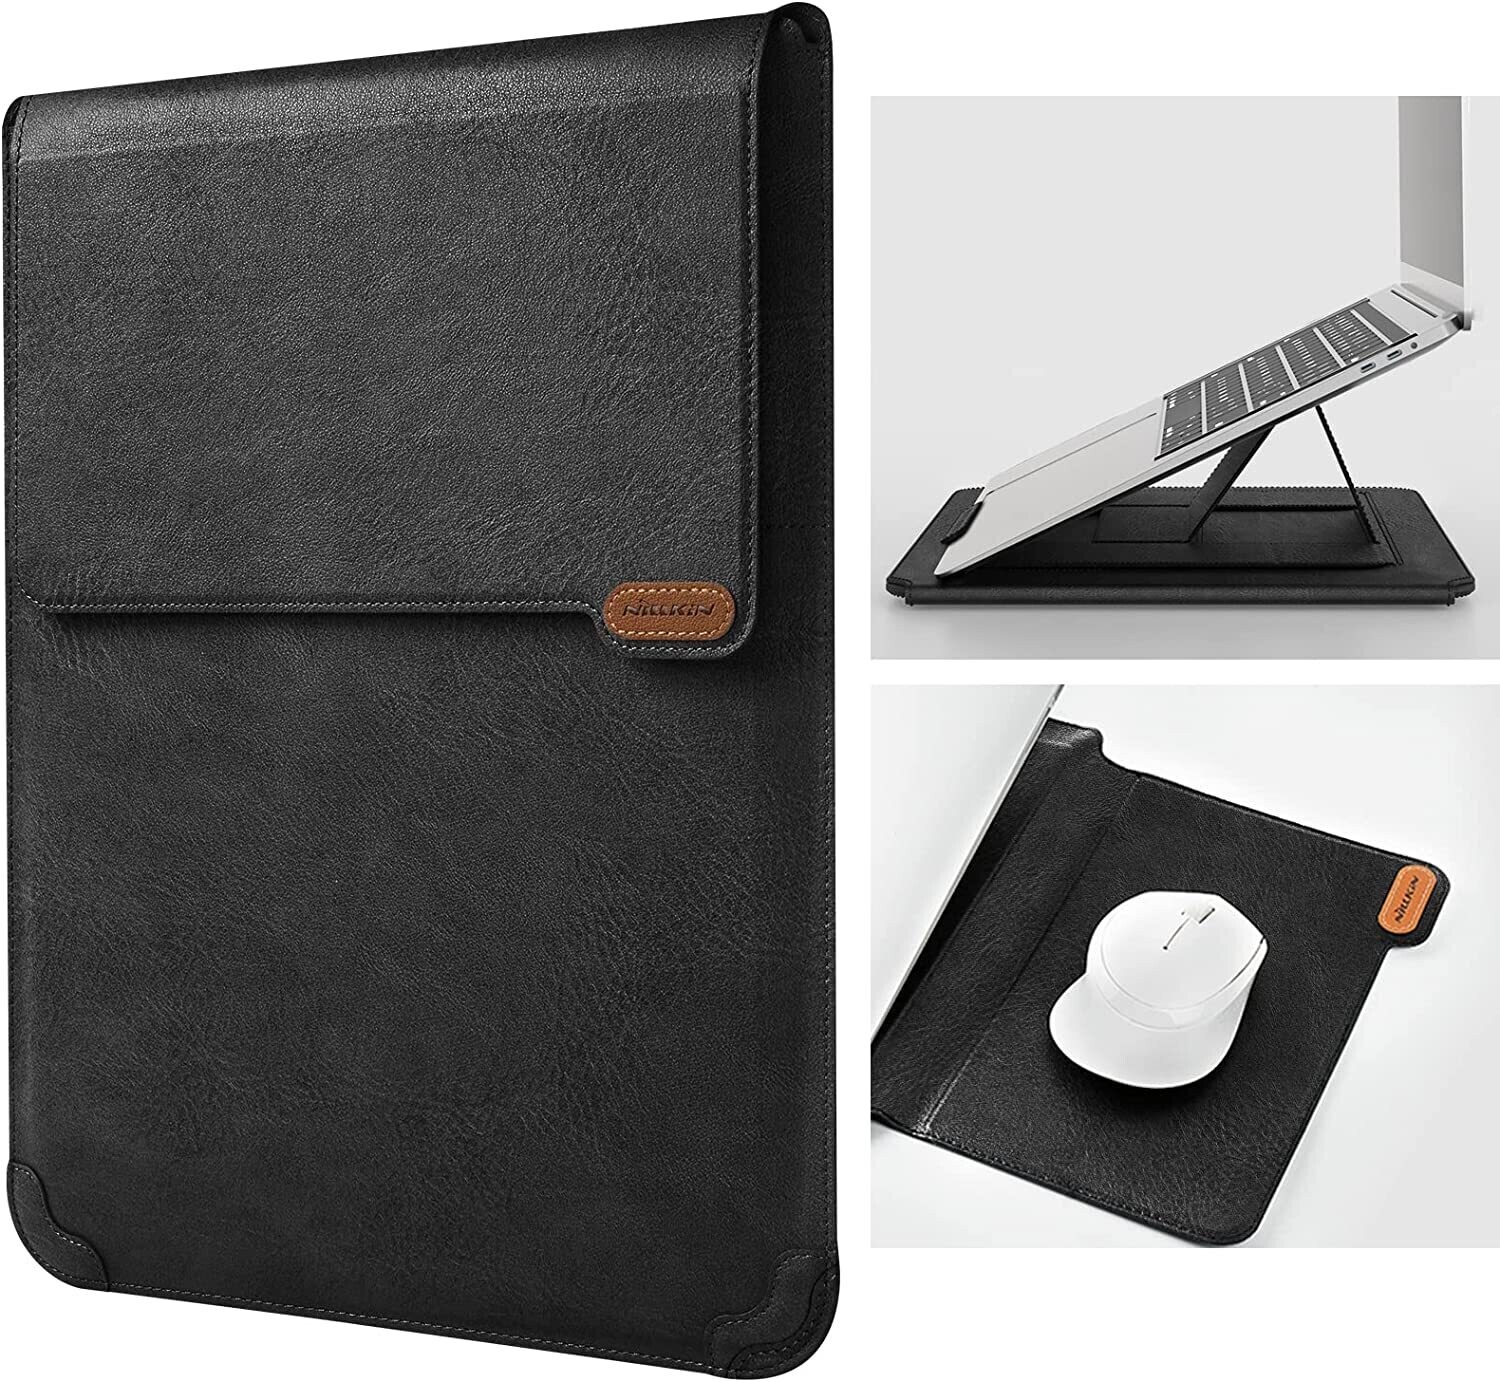 Nillkin OEM 3 in 1 Multifunctional  Versatile Laptop Sleeve 15.6 Laptop Stand Adjustable, Computer Shock Resistant Bag with Mouse Pad